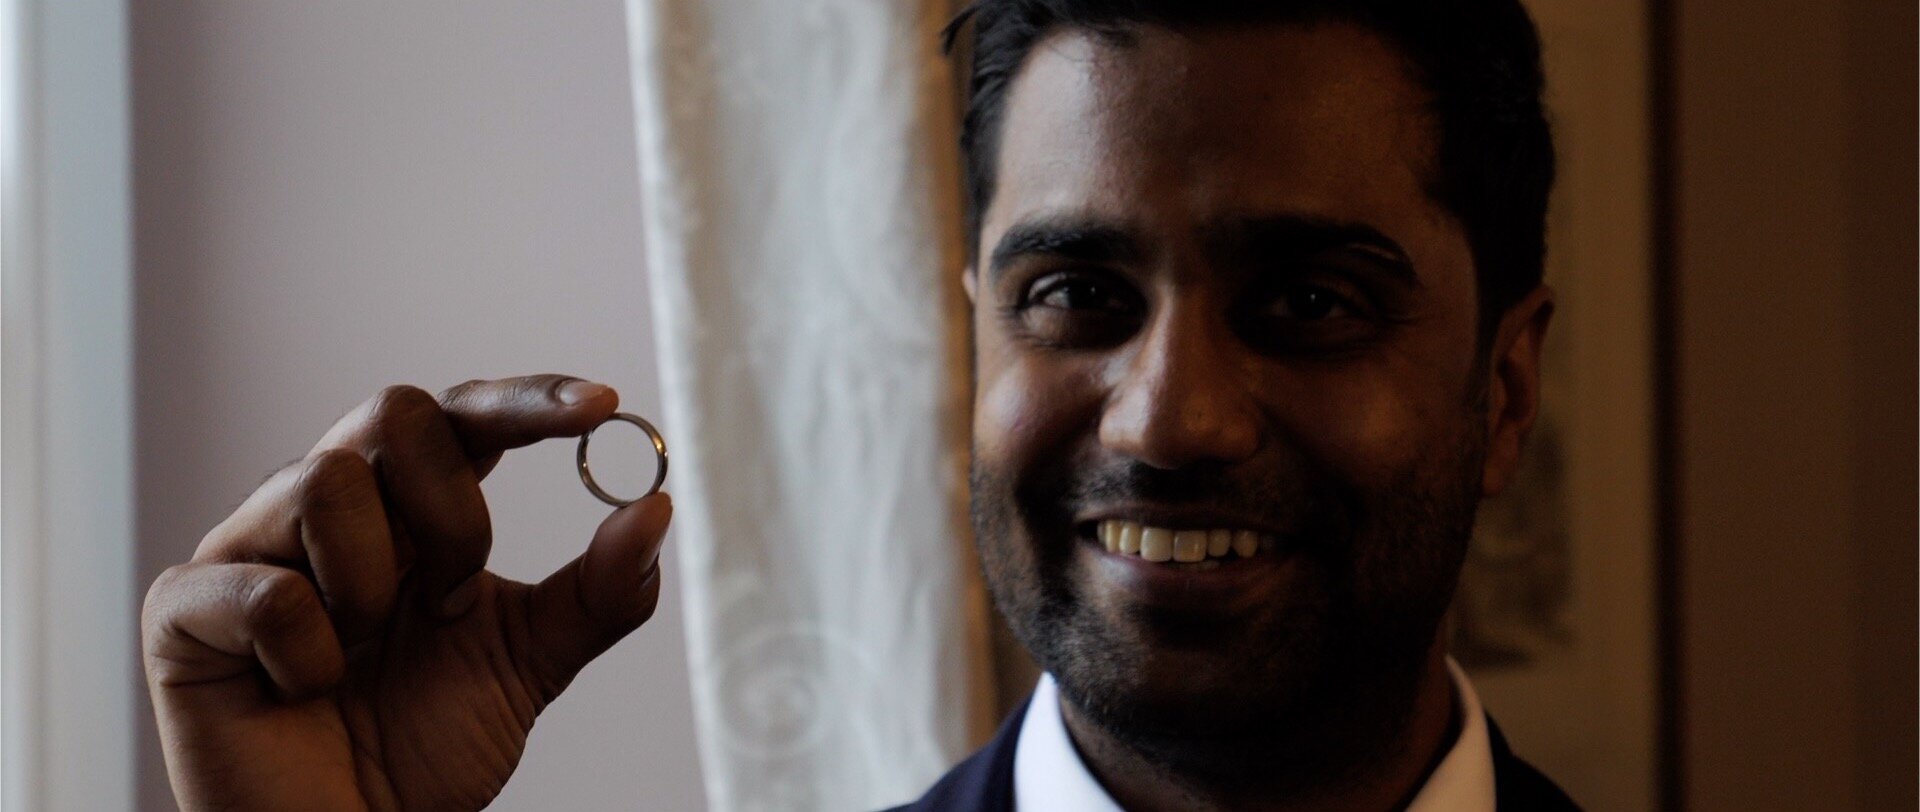 Inidan groom holding a wedding ring video.jpg